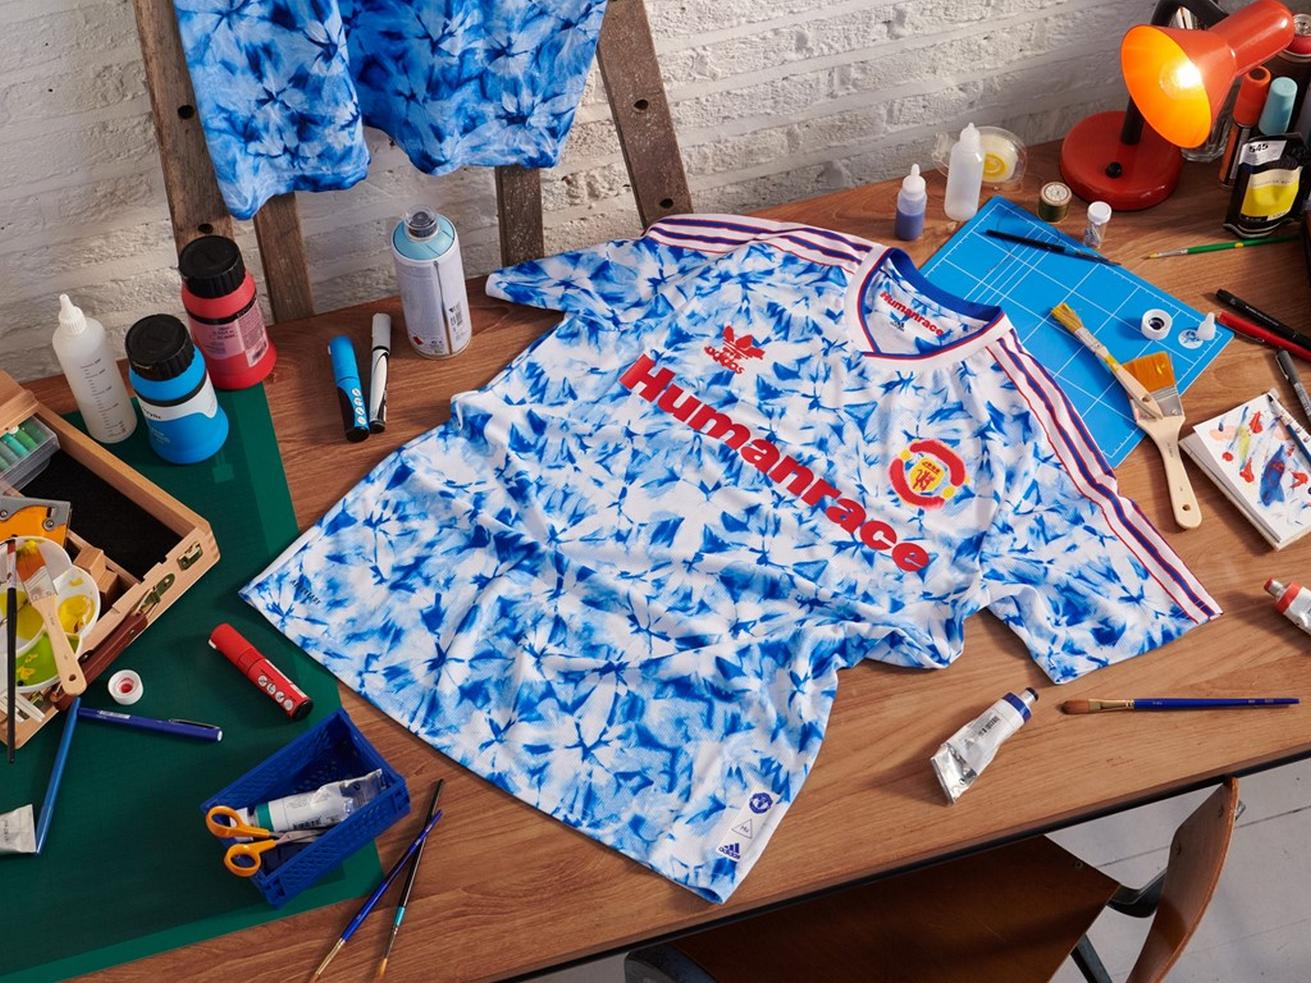 Camiseta Manchester United "Human Race" x Pharrell Williams 2020 | Imagen adidas